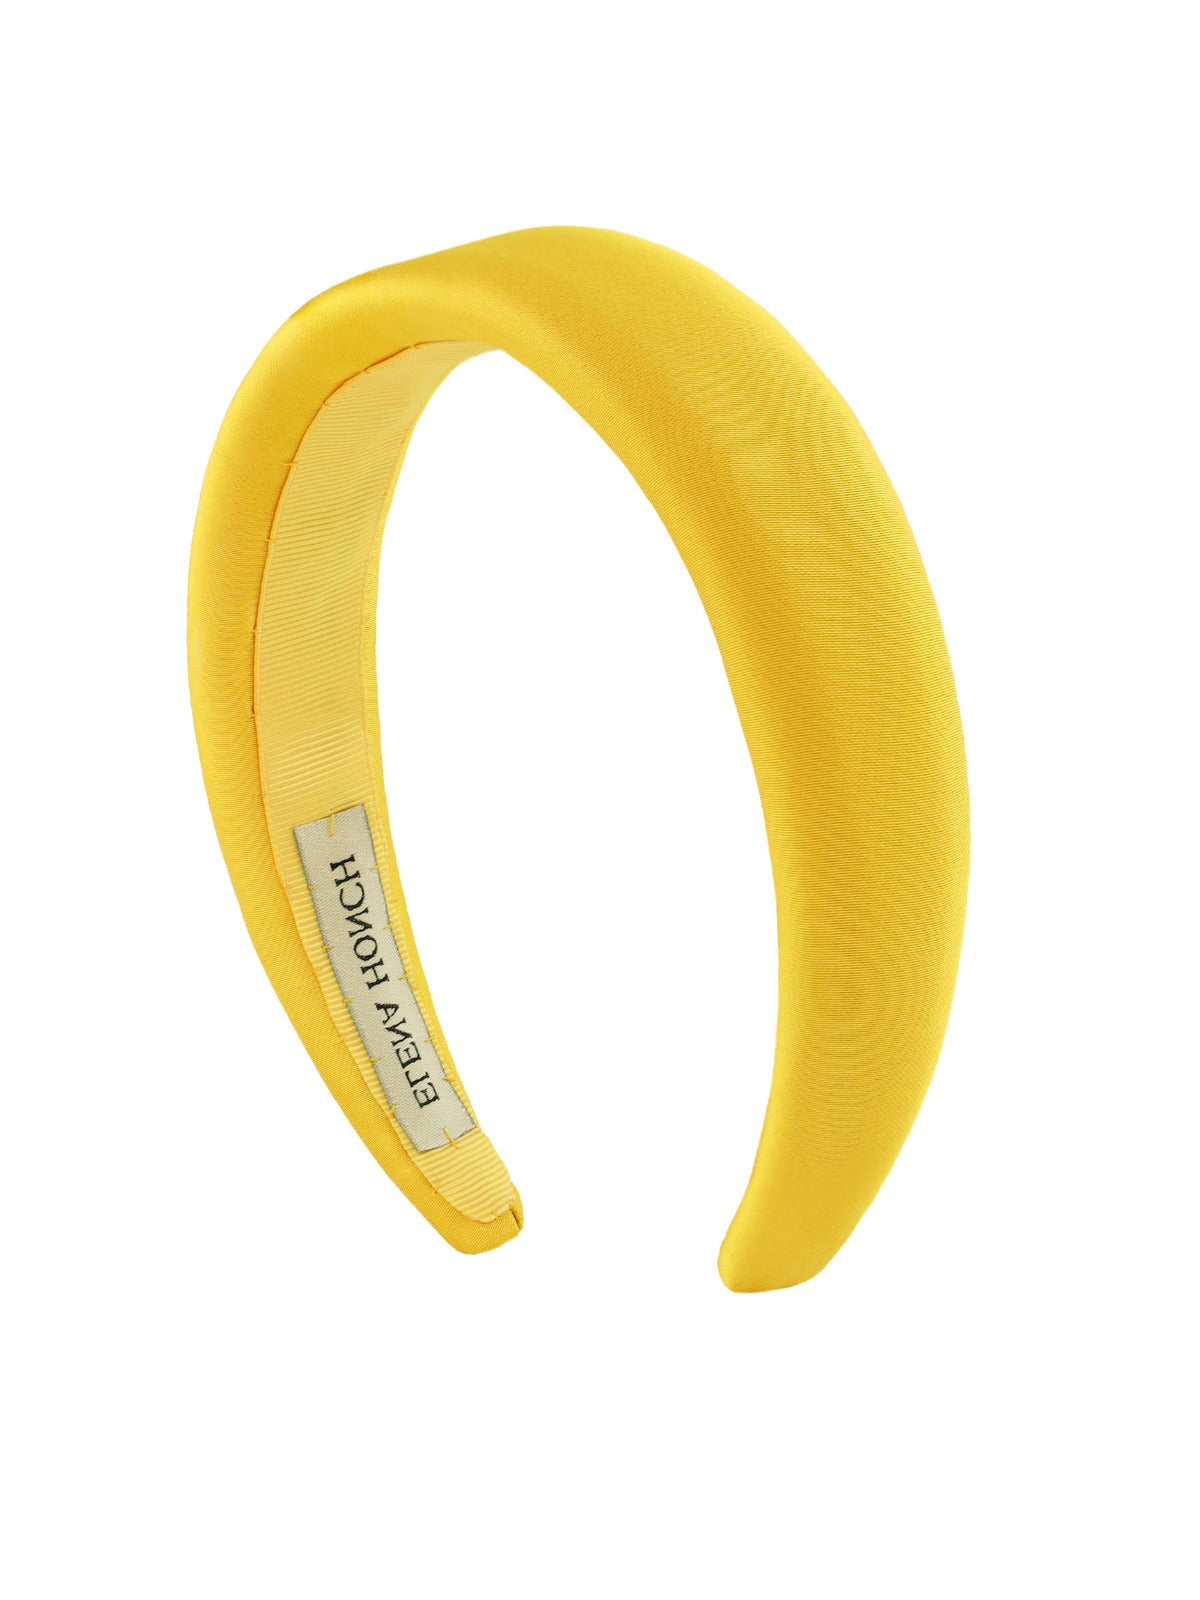 Basic Yellow Headband